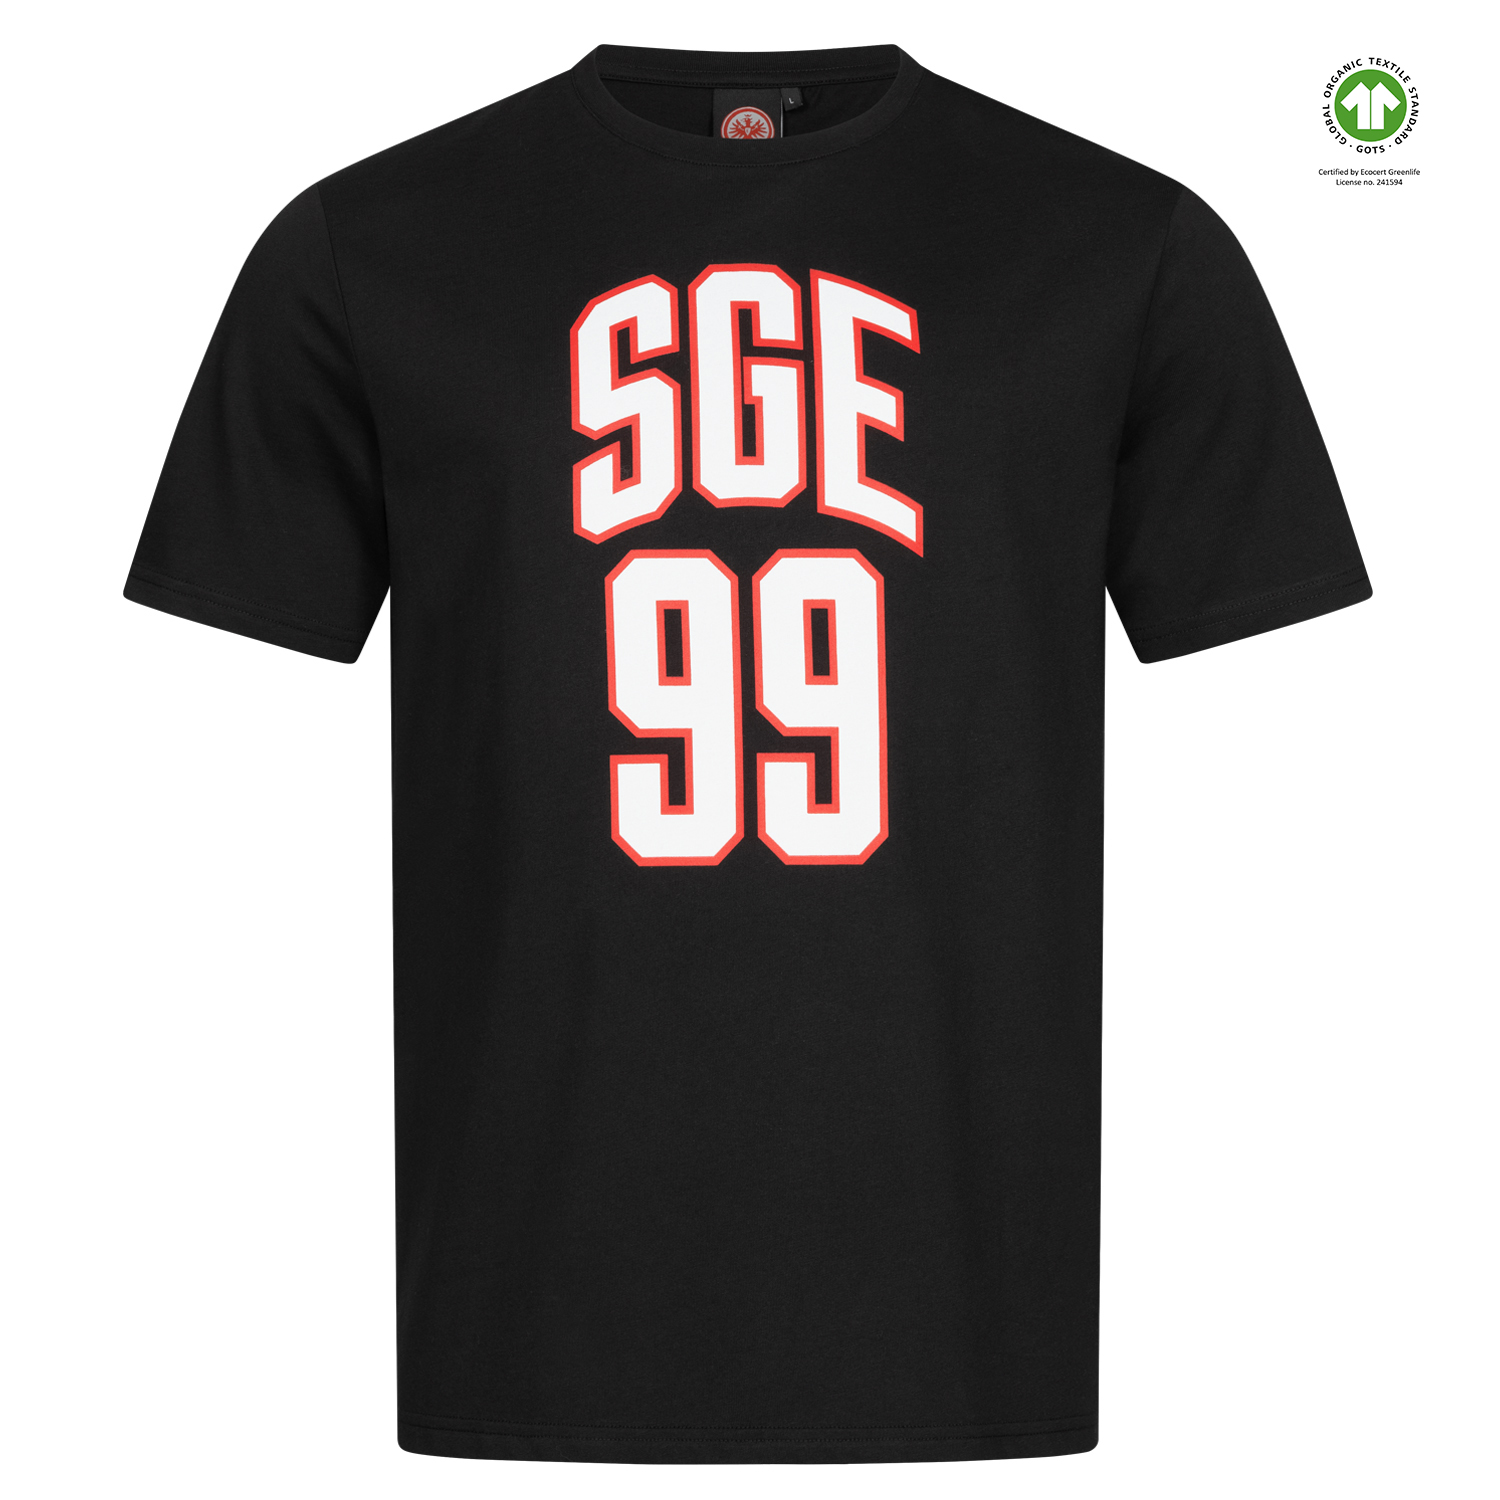 Bild 1: T-Shirt SGE 99